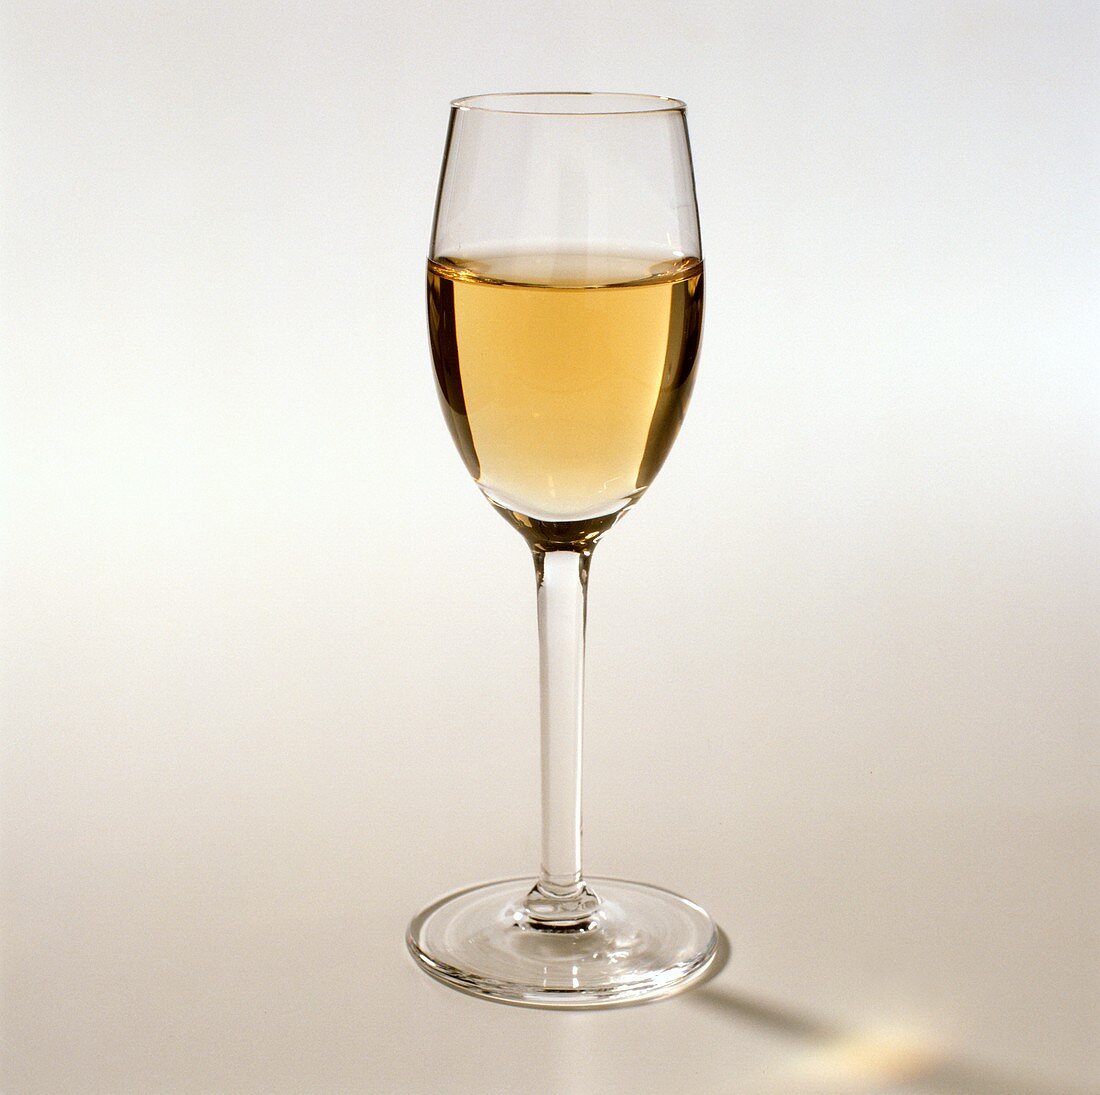 A glass of sherry: Fino